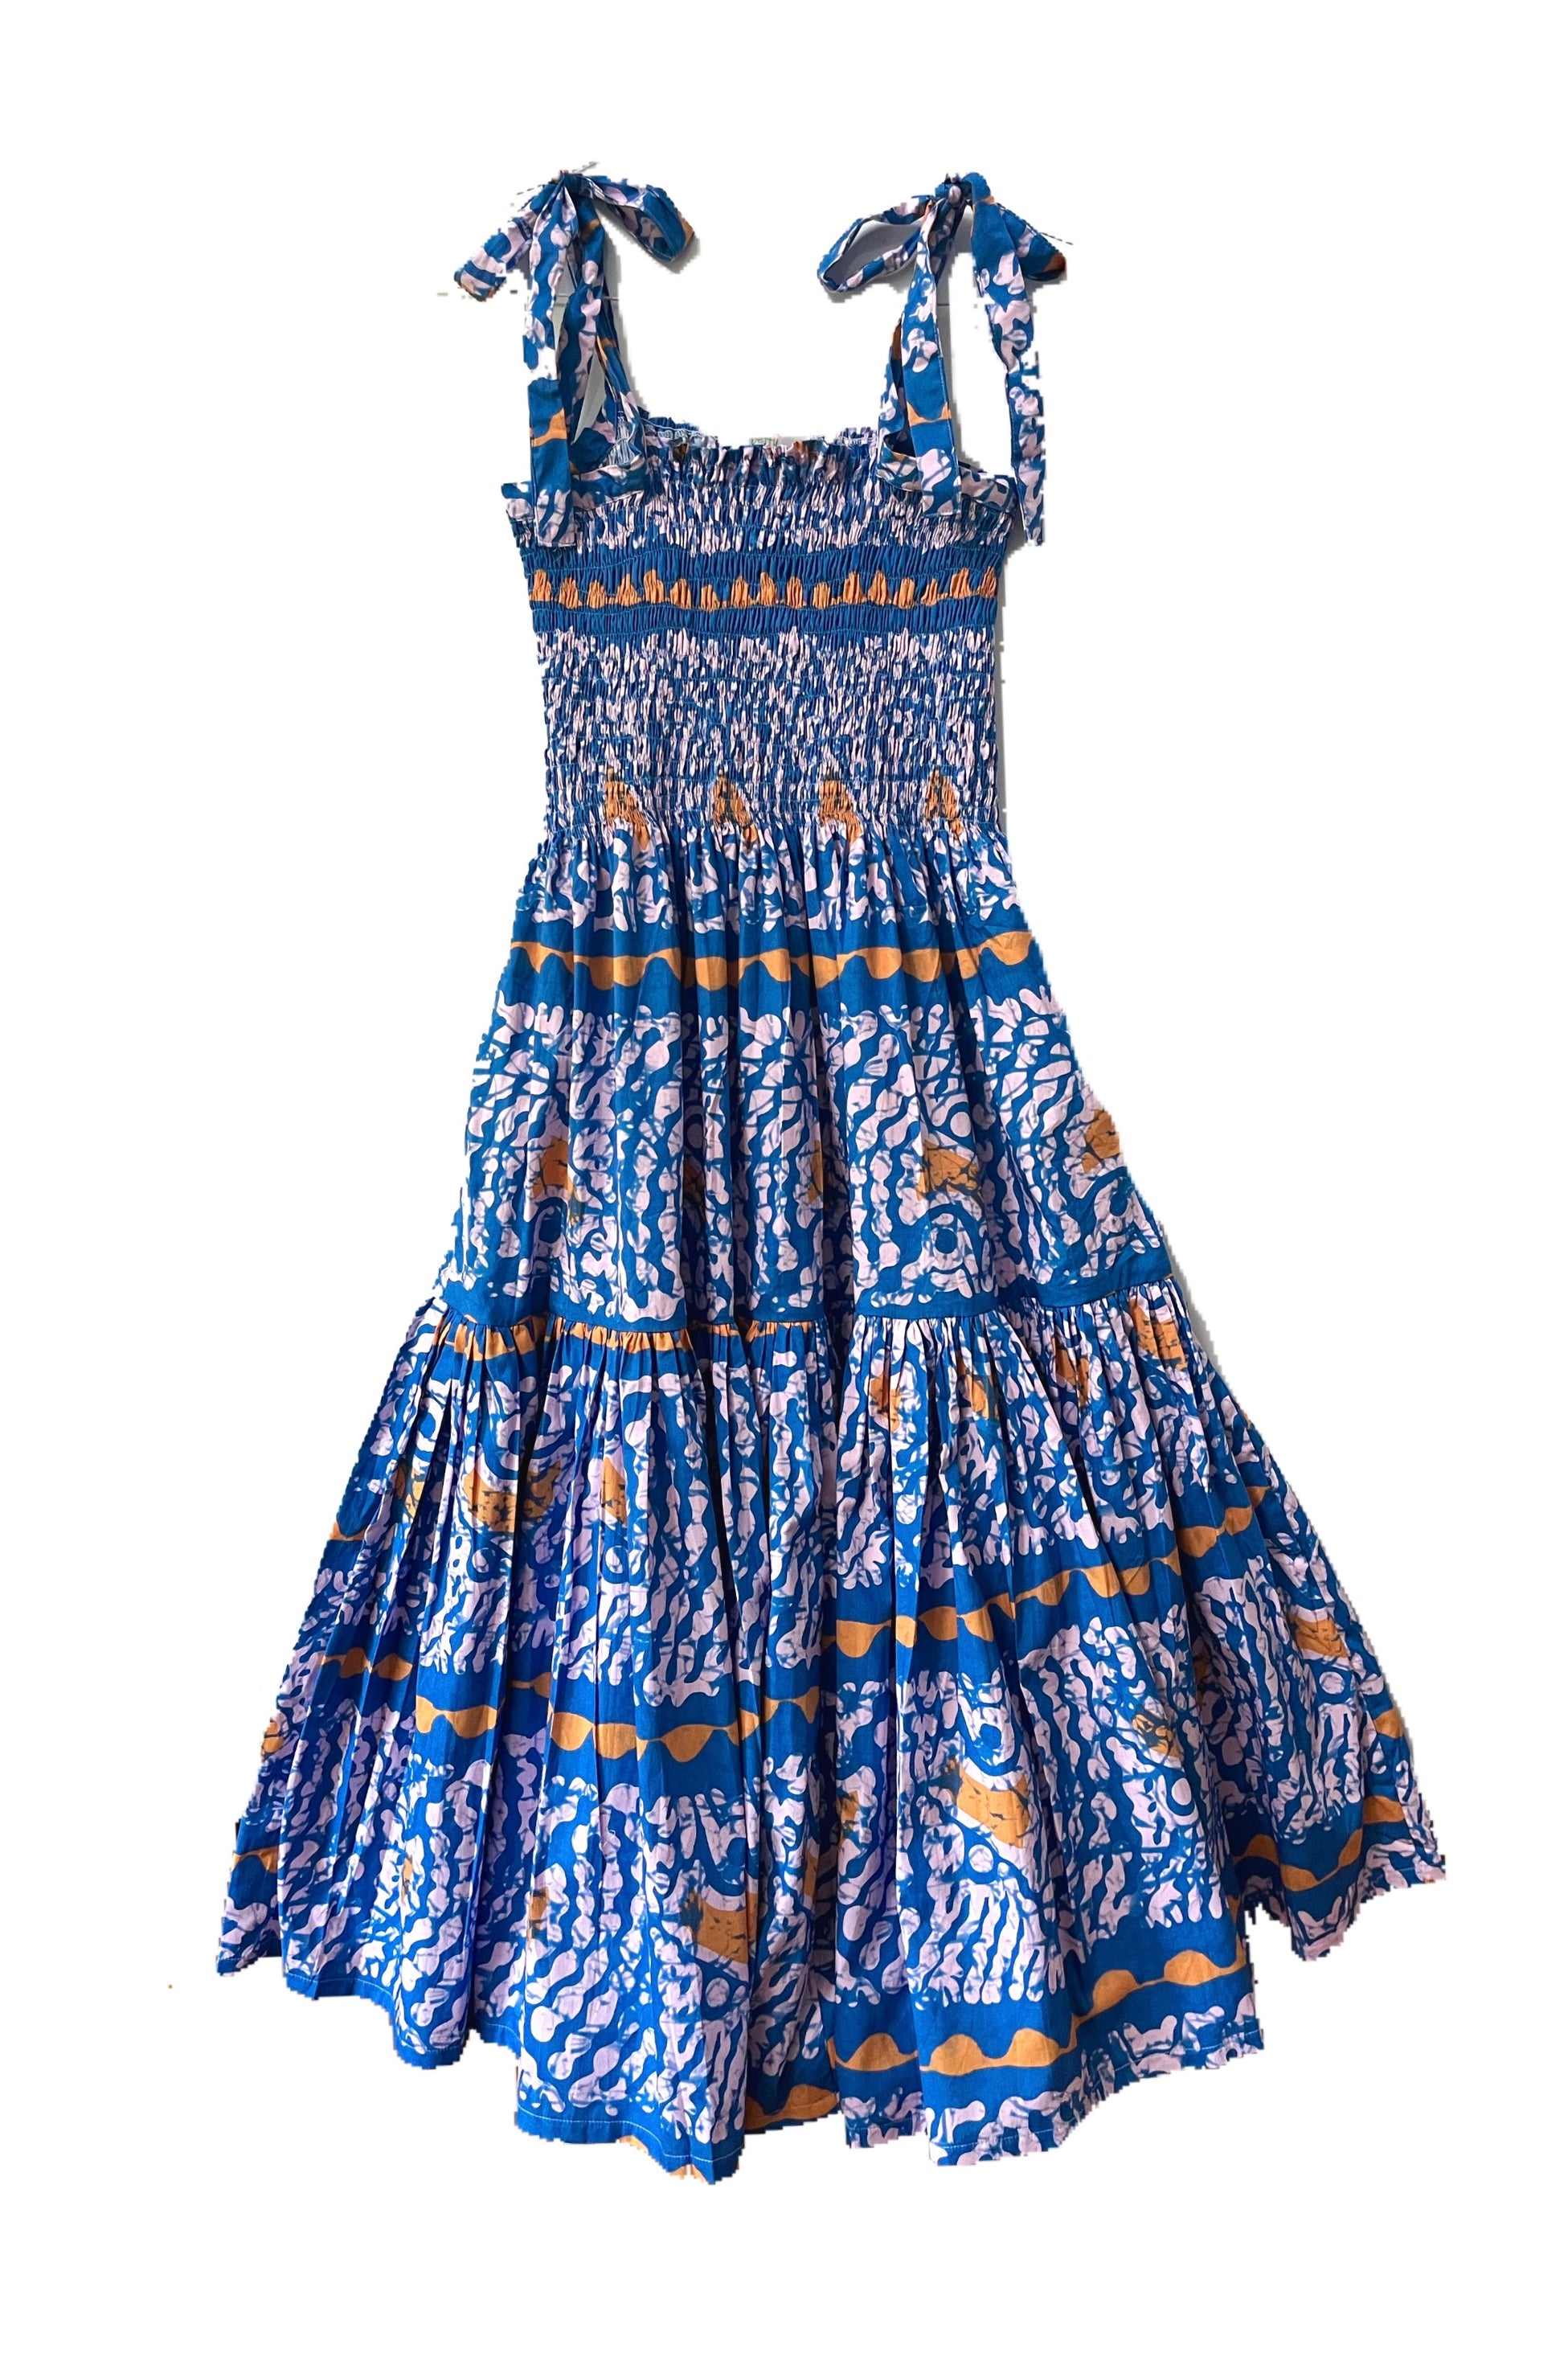 Shop Sale African Print Clothing | Buy African dresses CUMO London – CUMO  LONDON